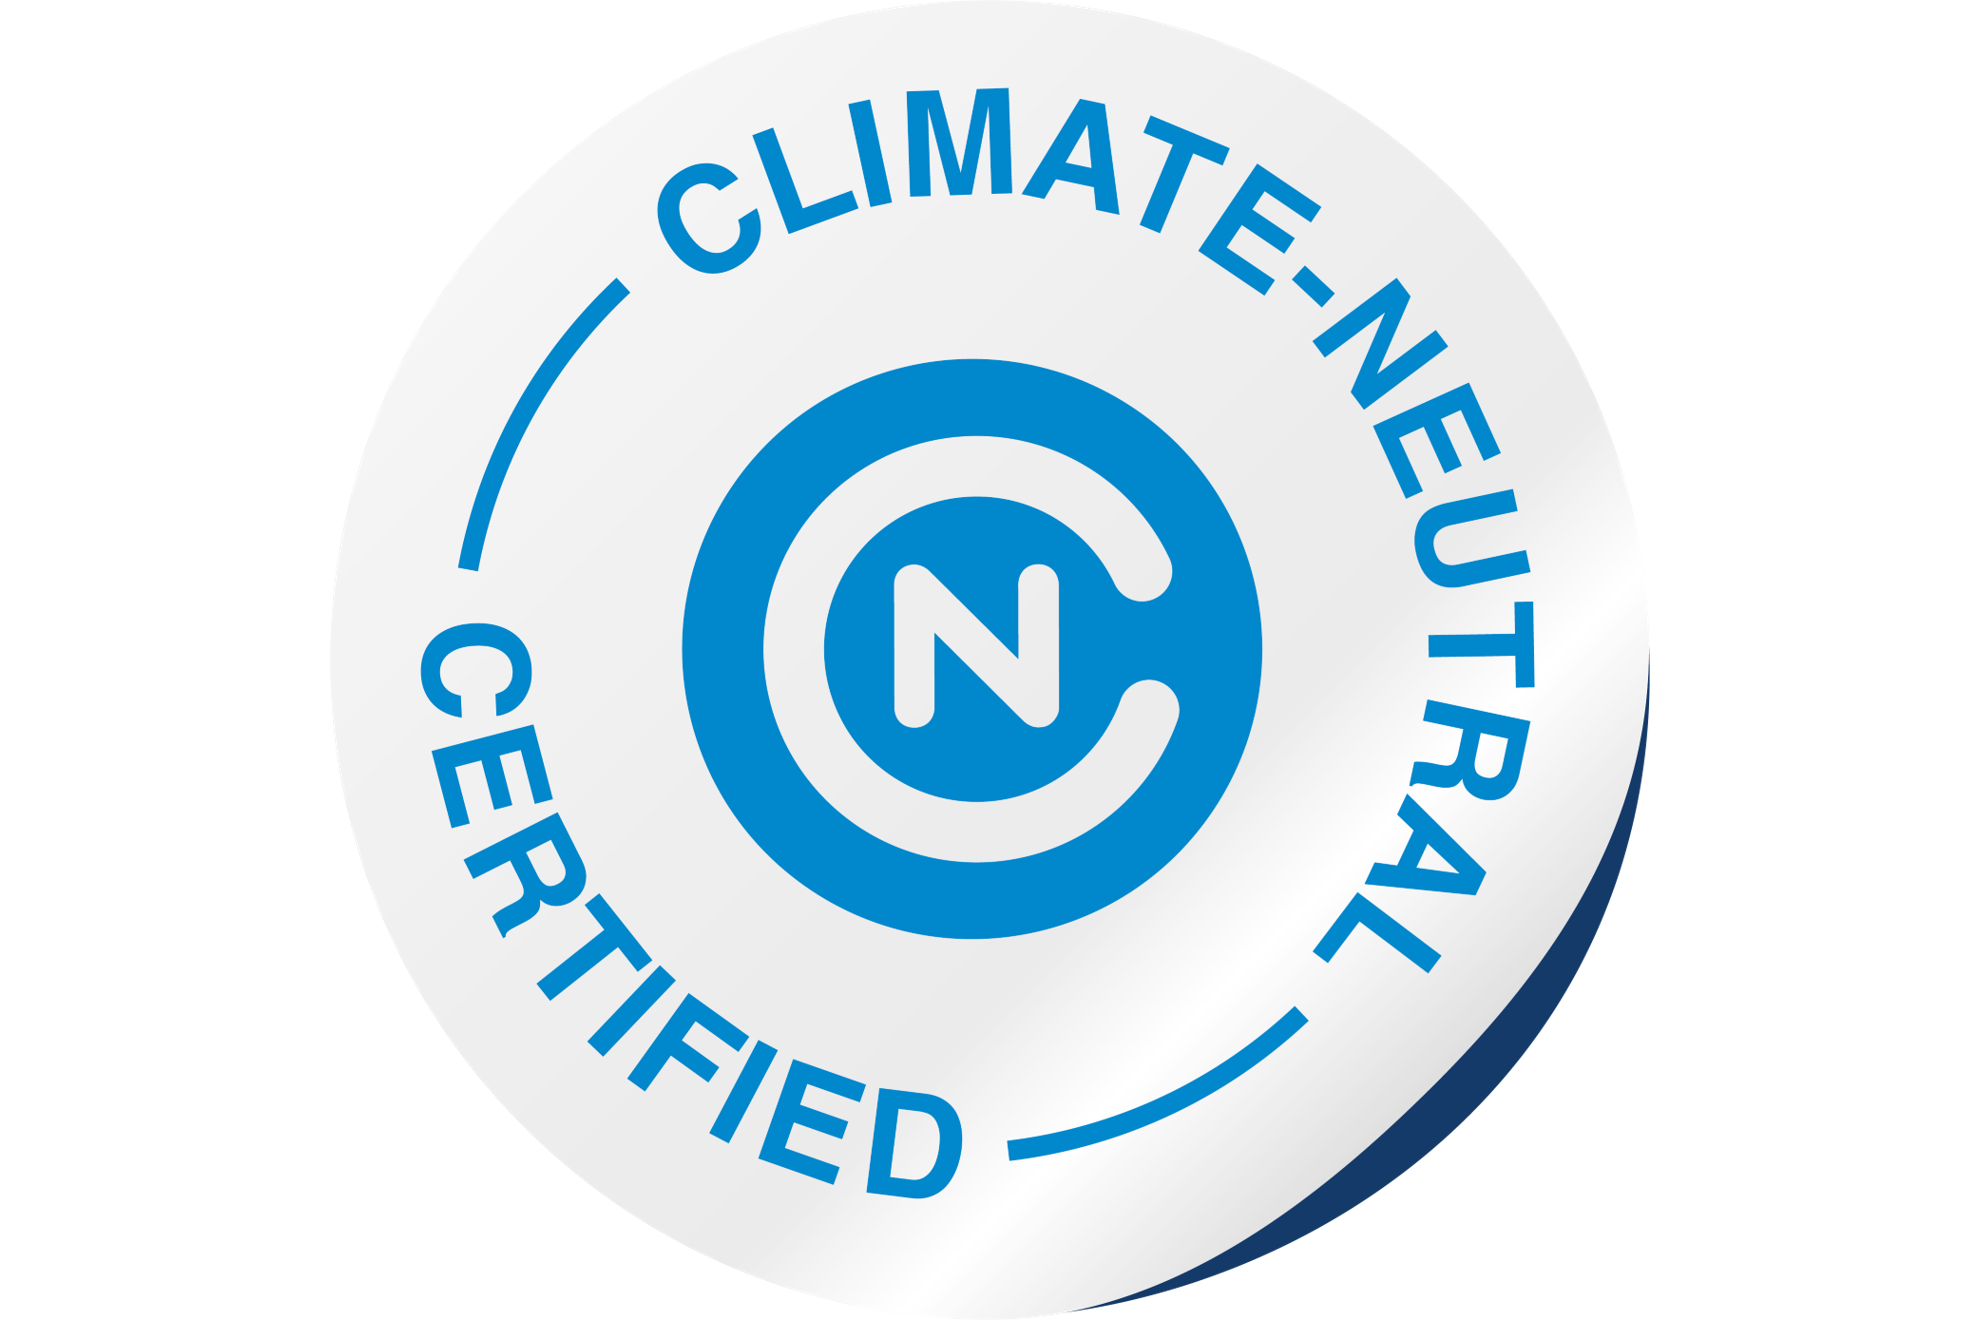 File:CNG-logo.png - Wikipedia